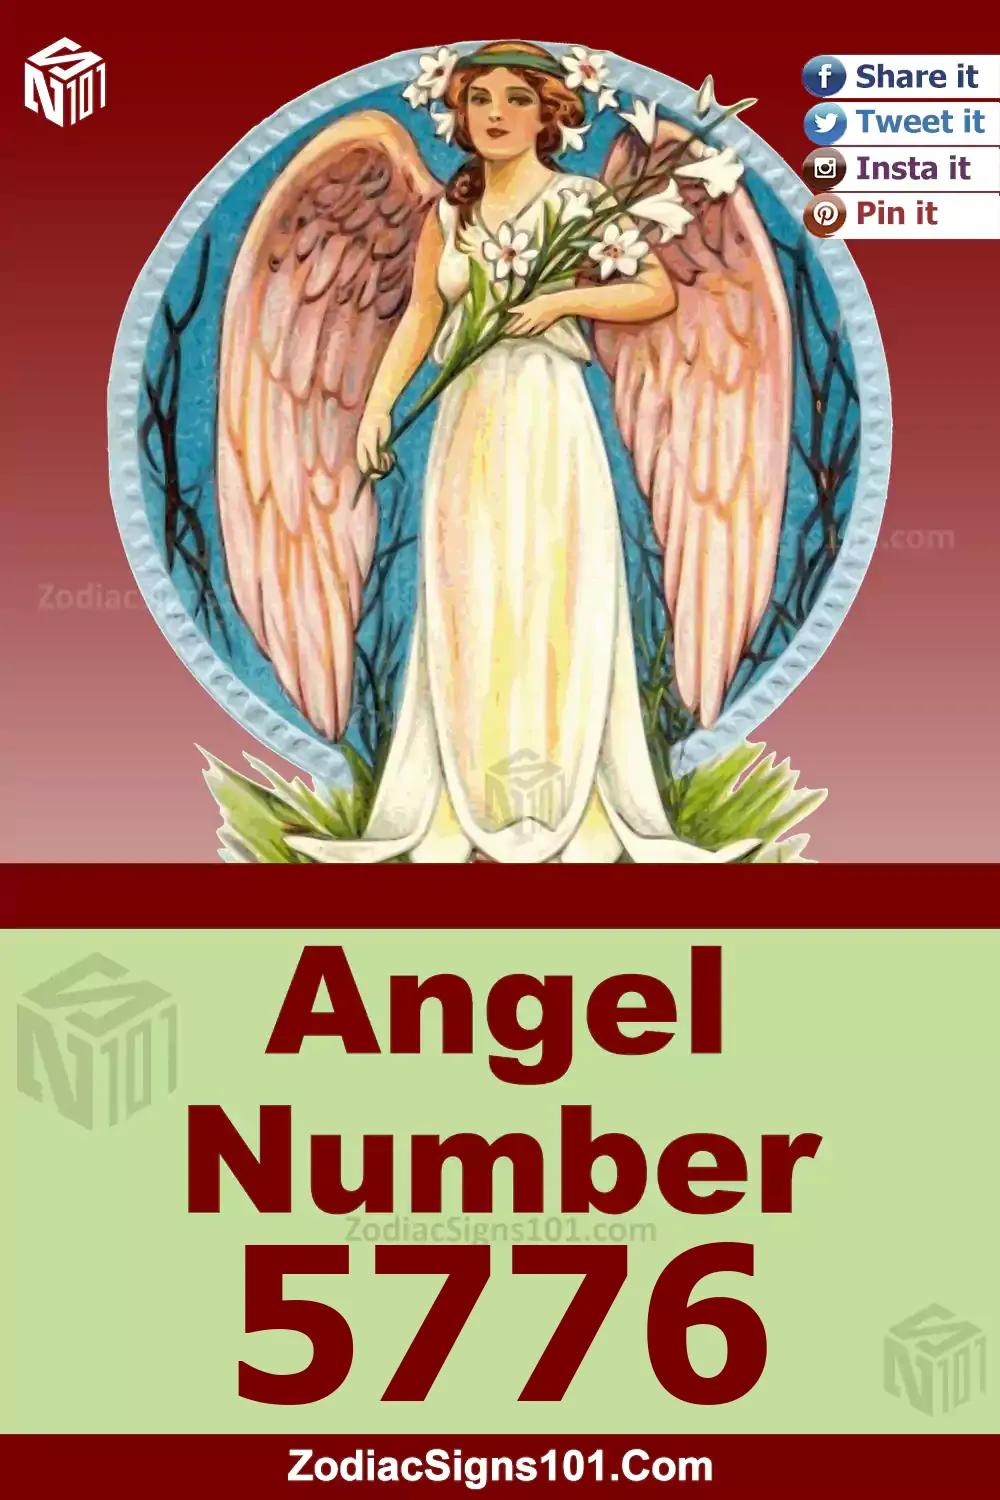 5776-Angel-Number-Meaning.jpg